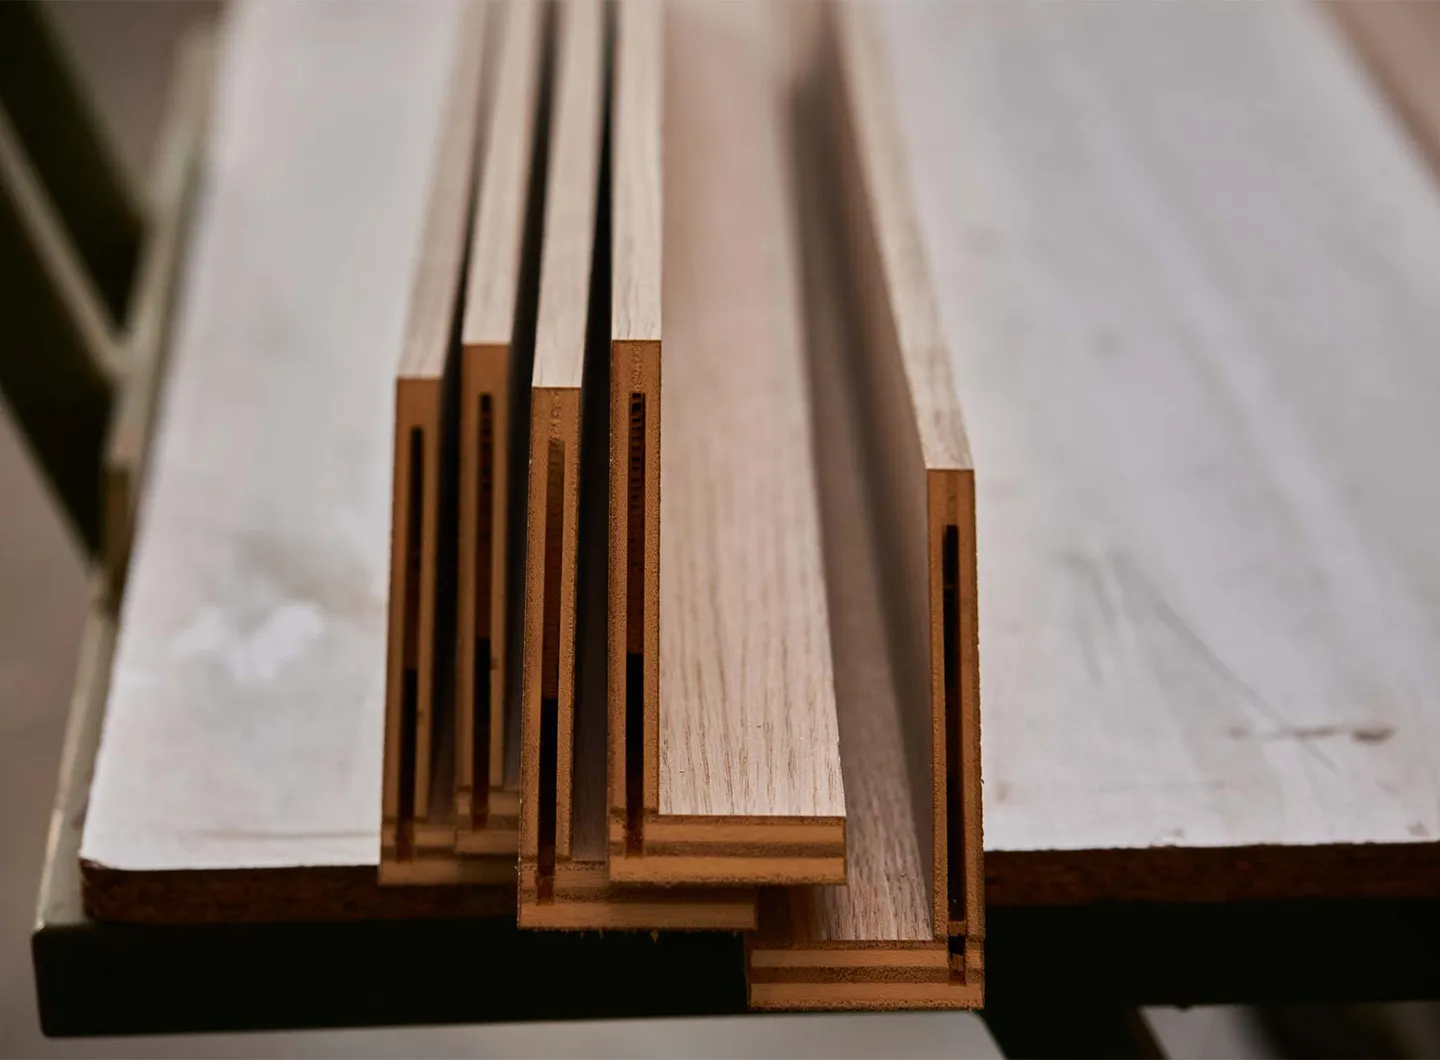 Processing with wood interlocking